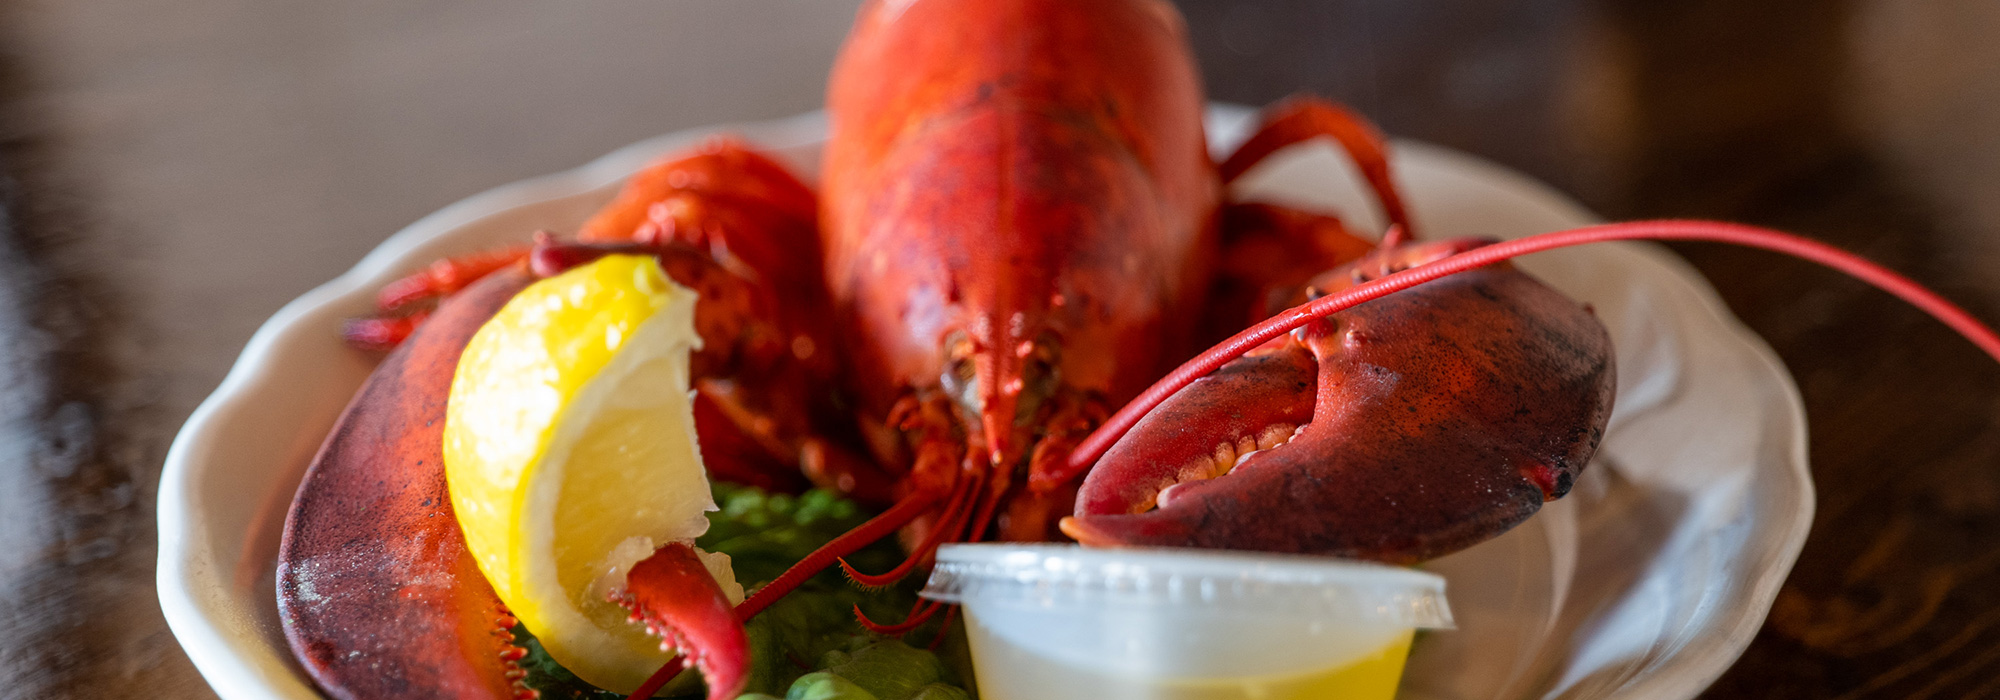 lobster-dinner-portsmouth-nh